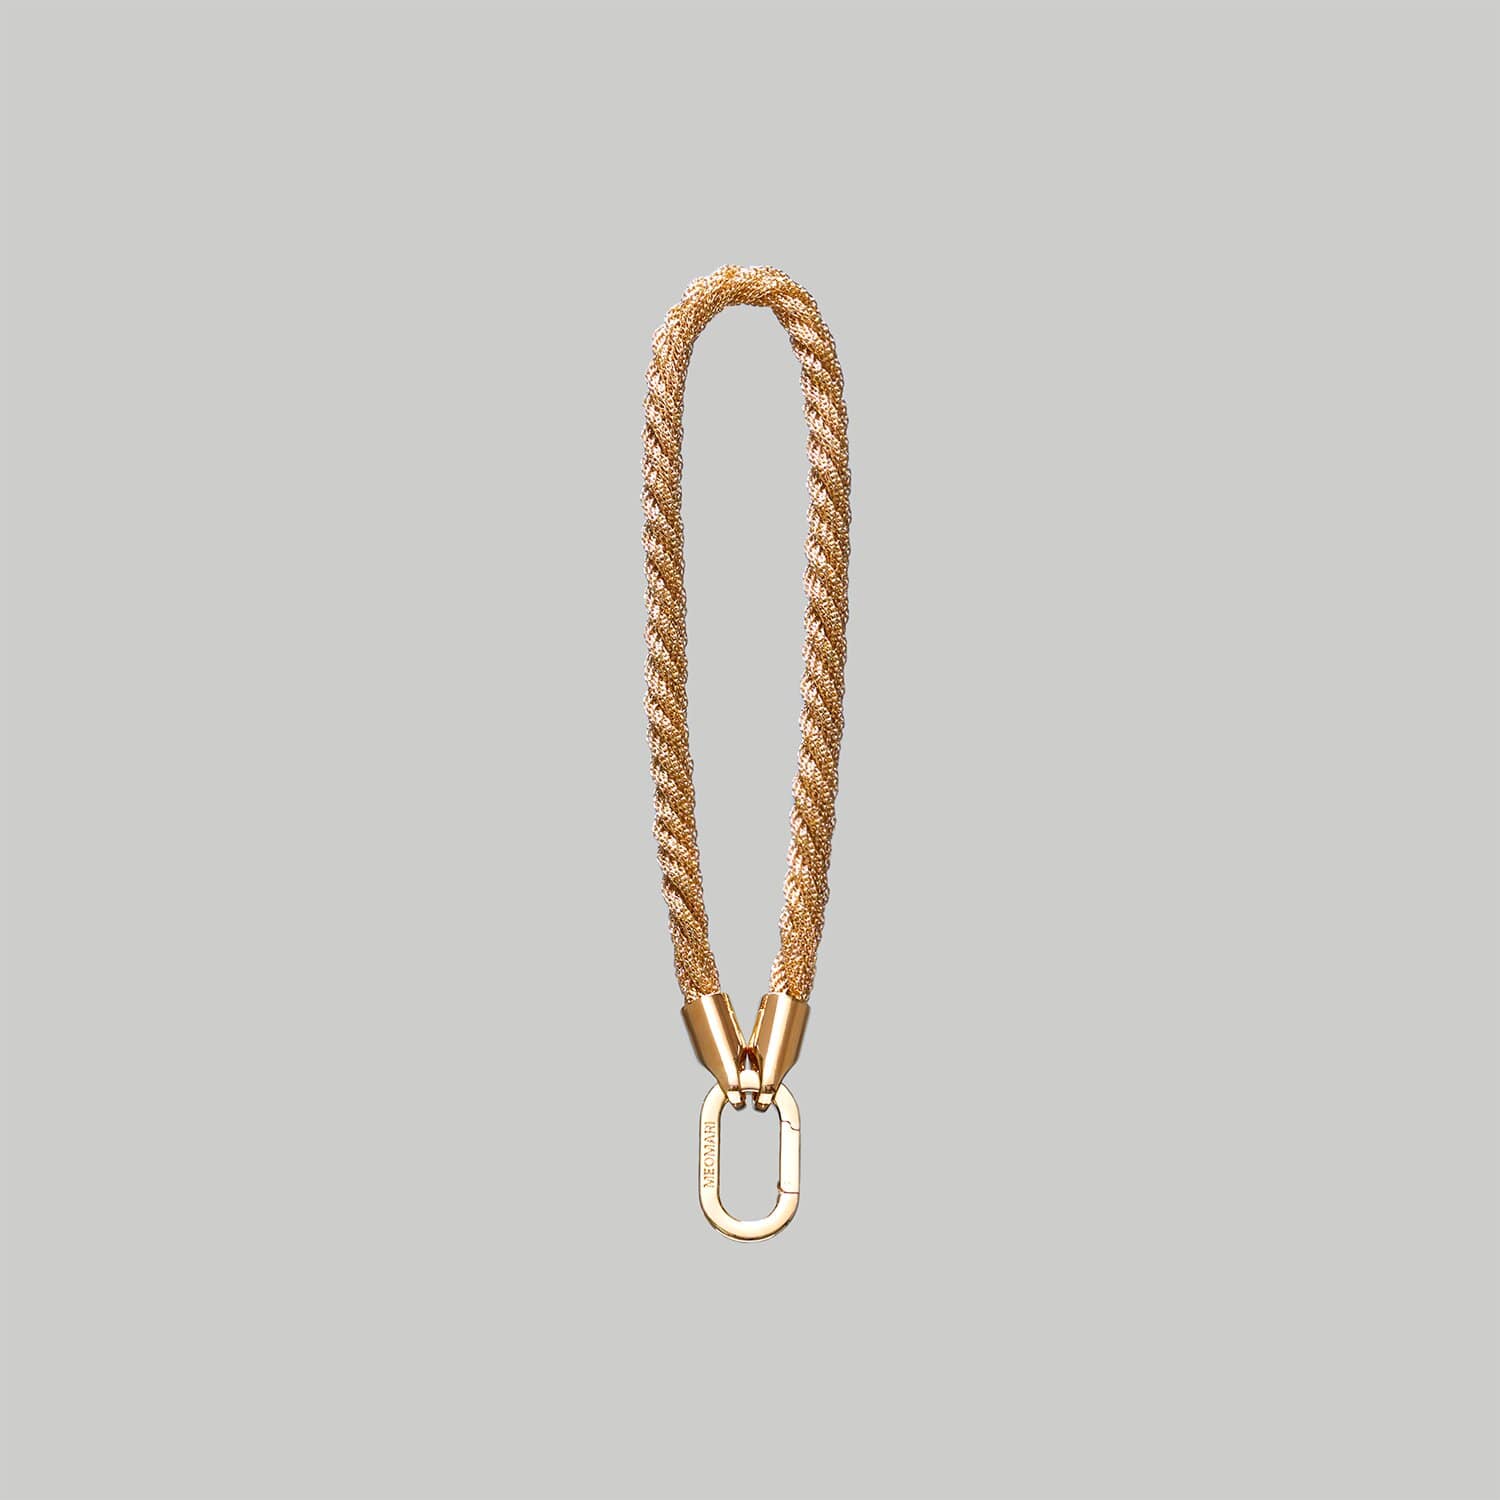 Dog leash handle in Gold braided - Meomari